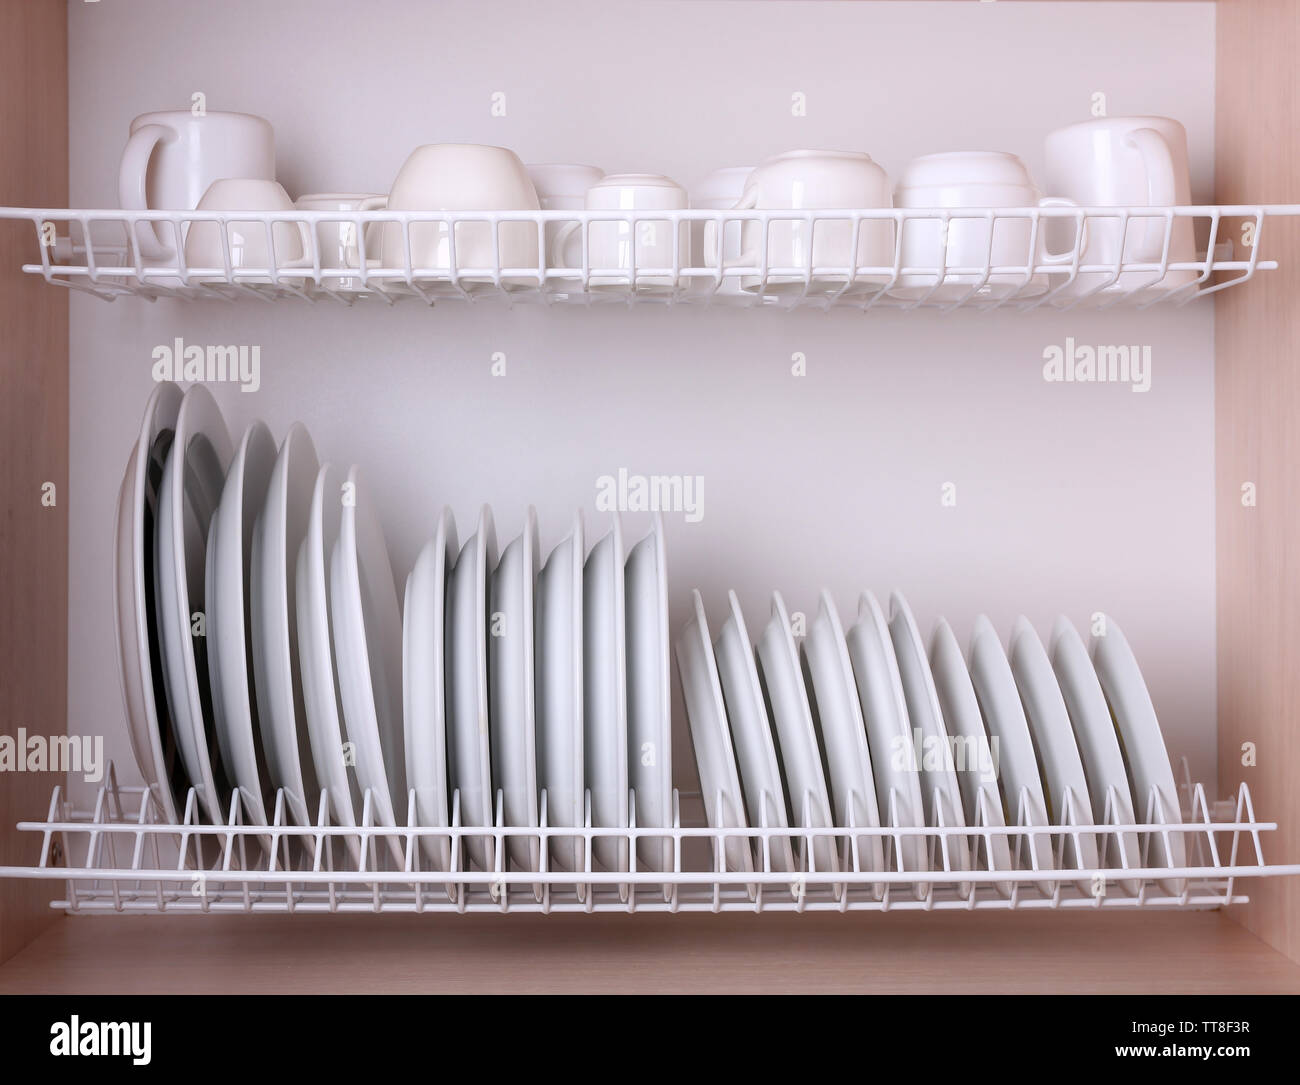 https://c8.alamy.com/comp/TT8F3R/clean-dishes-drying-on-metal-dish-rack-on-shelf-TT8F3R.jpg